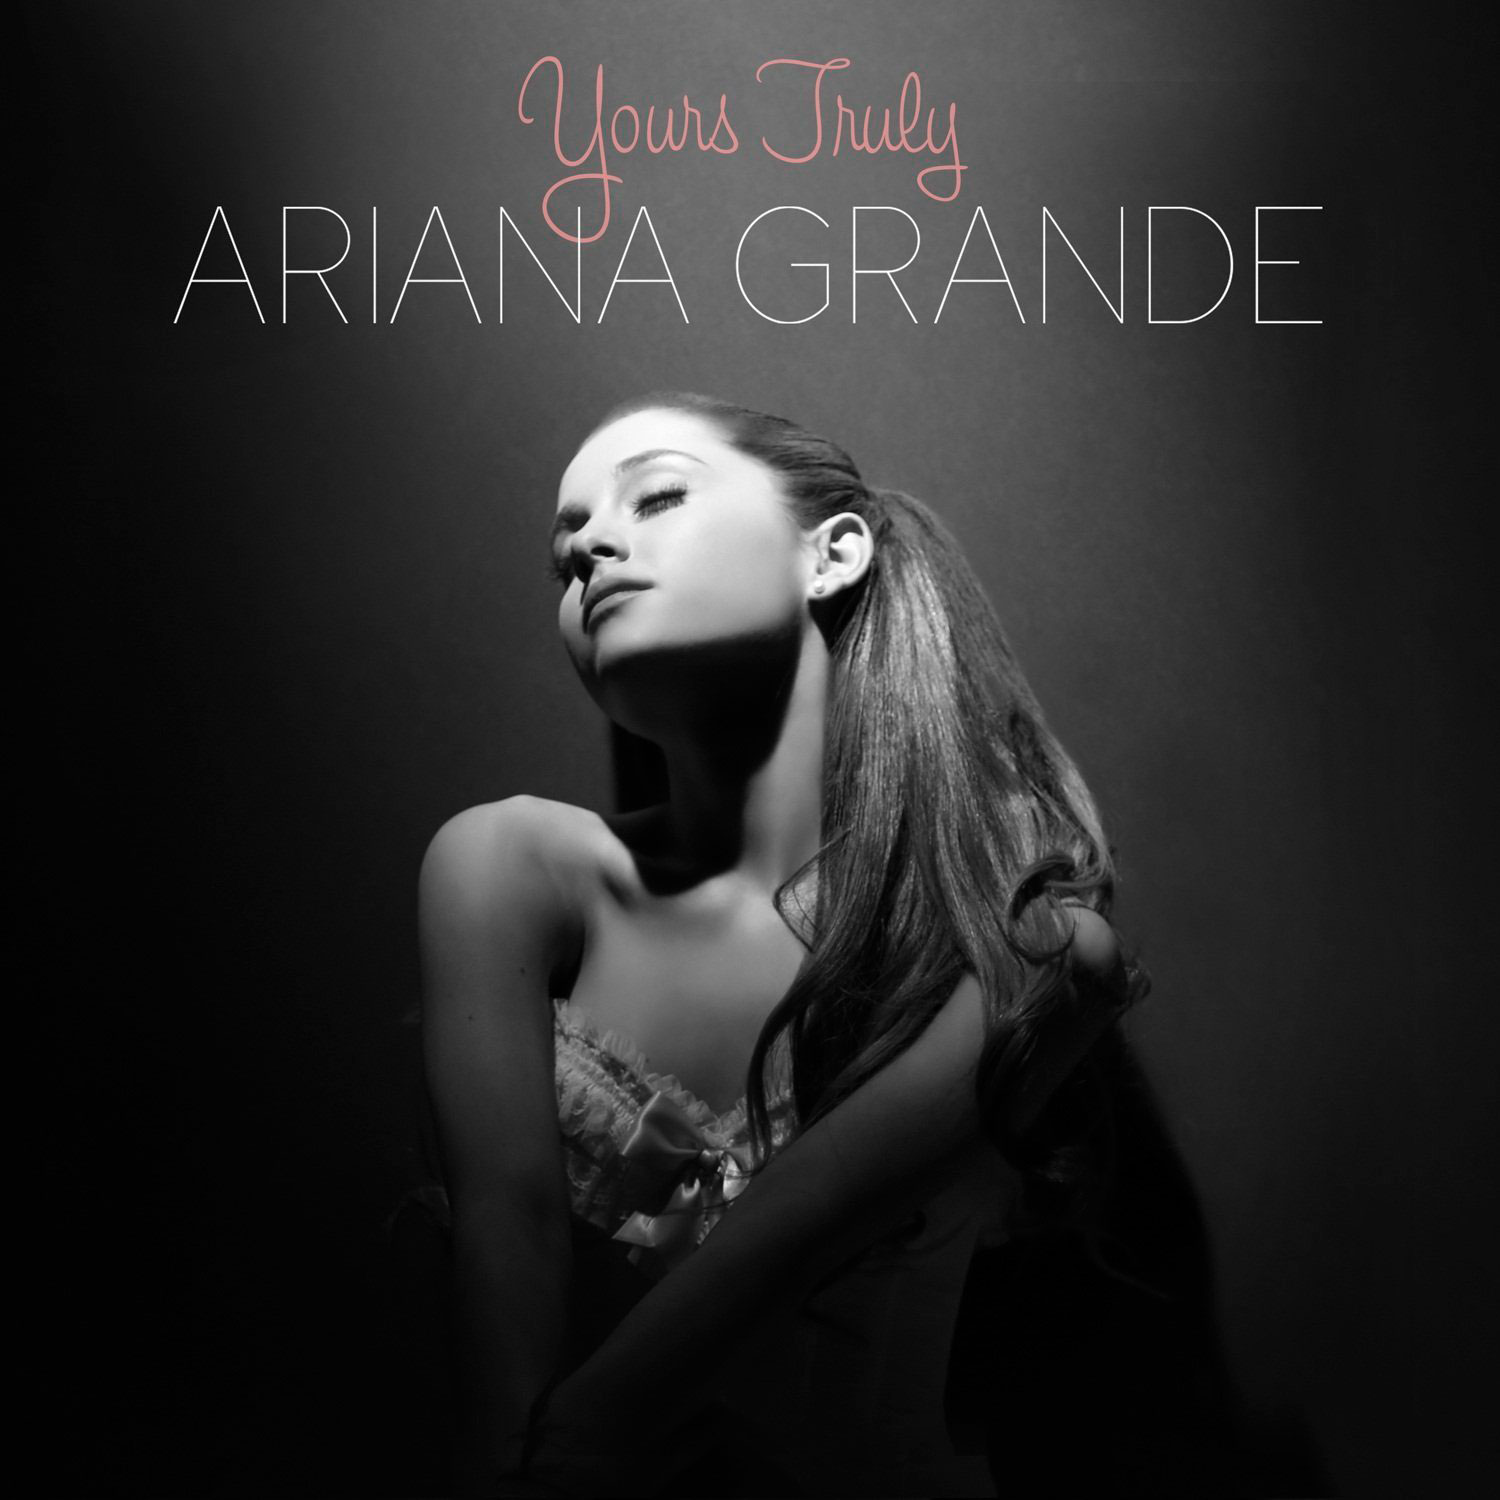 Ariana Grande: Yours truly, la portada del disco